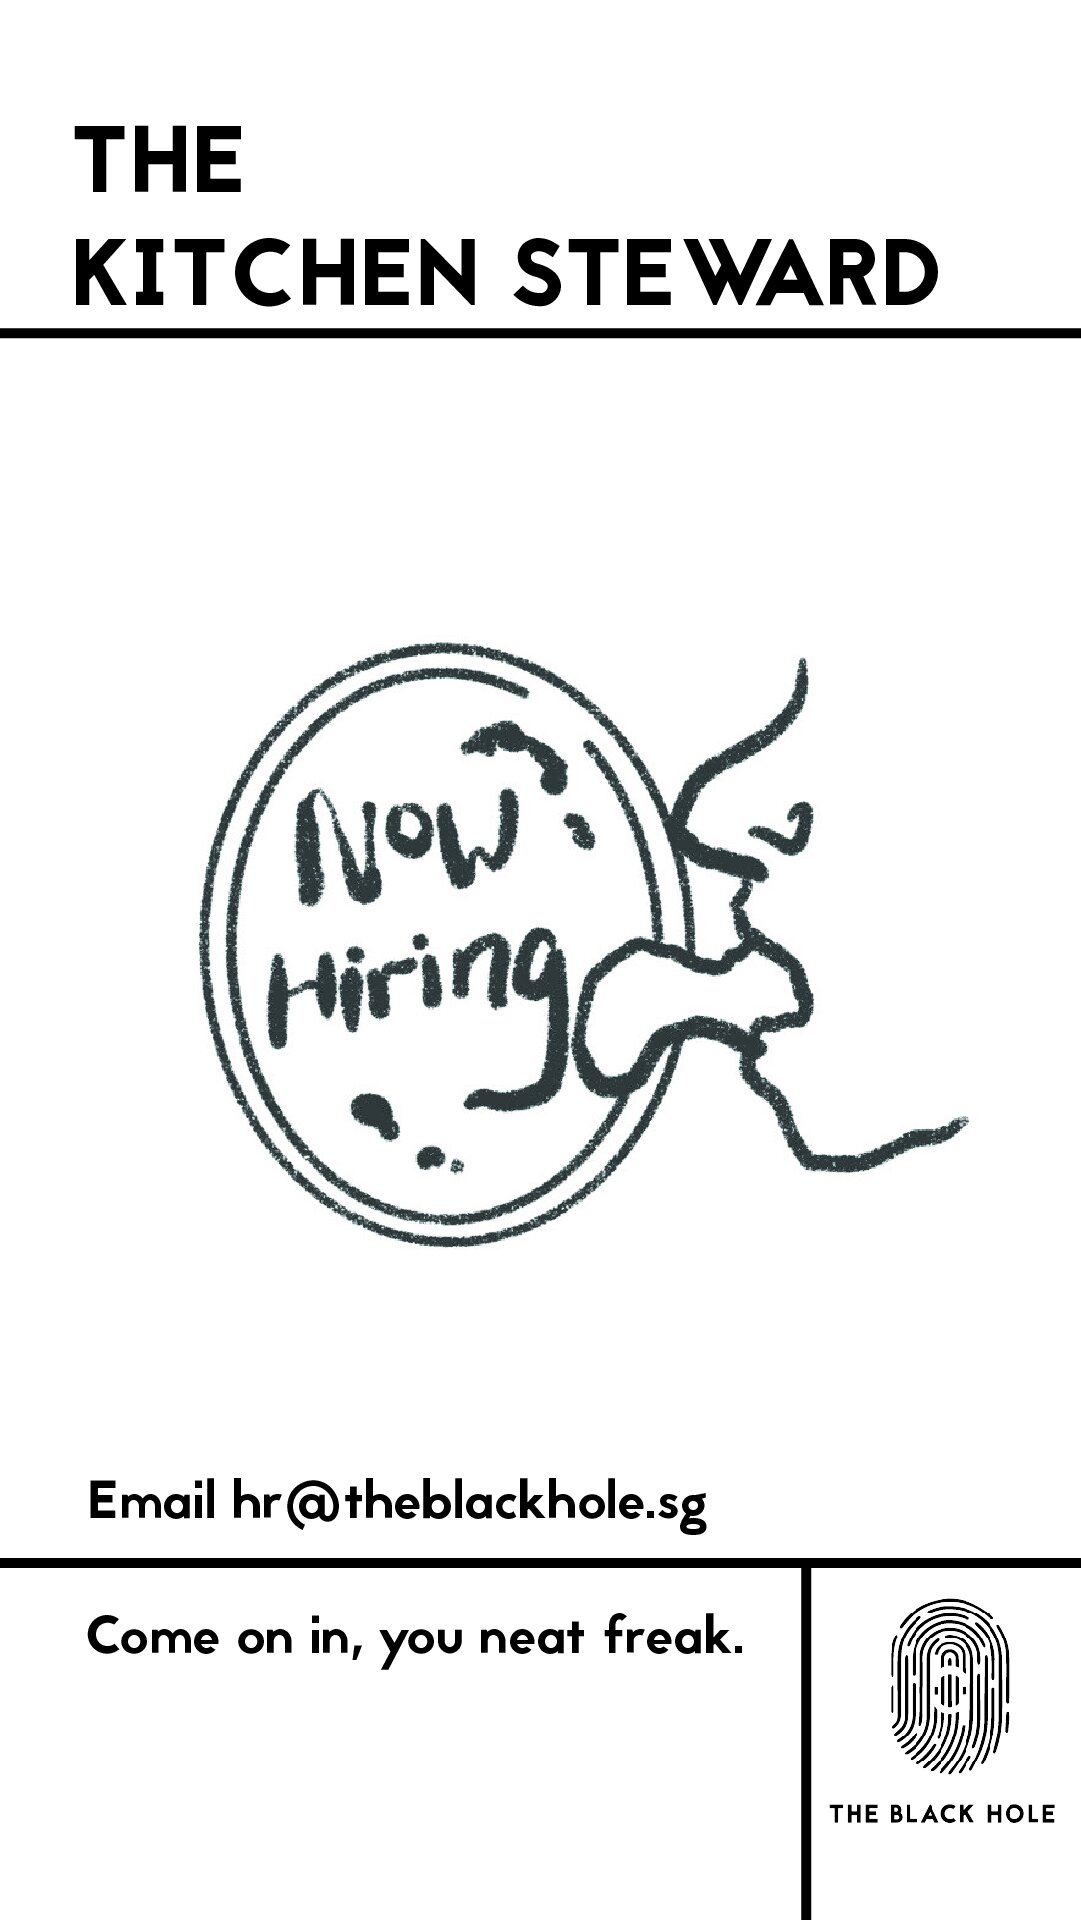 hiring illustration-kitchensteward.jpg